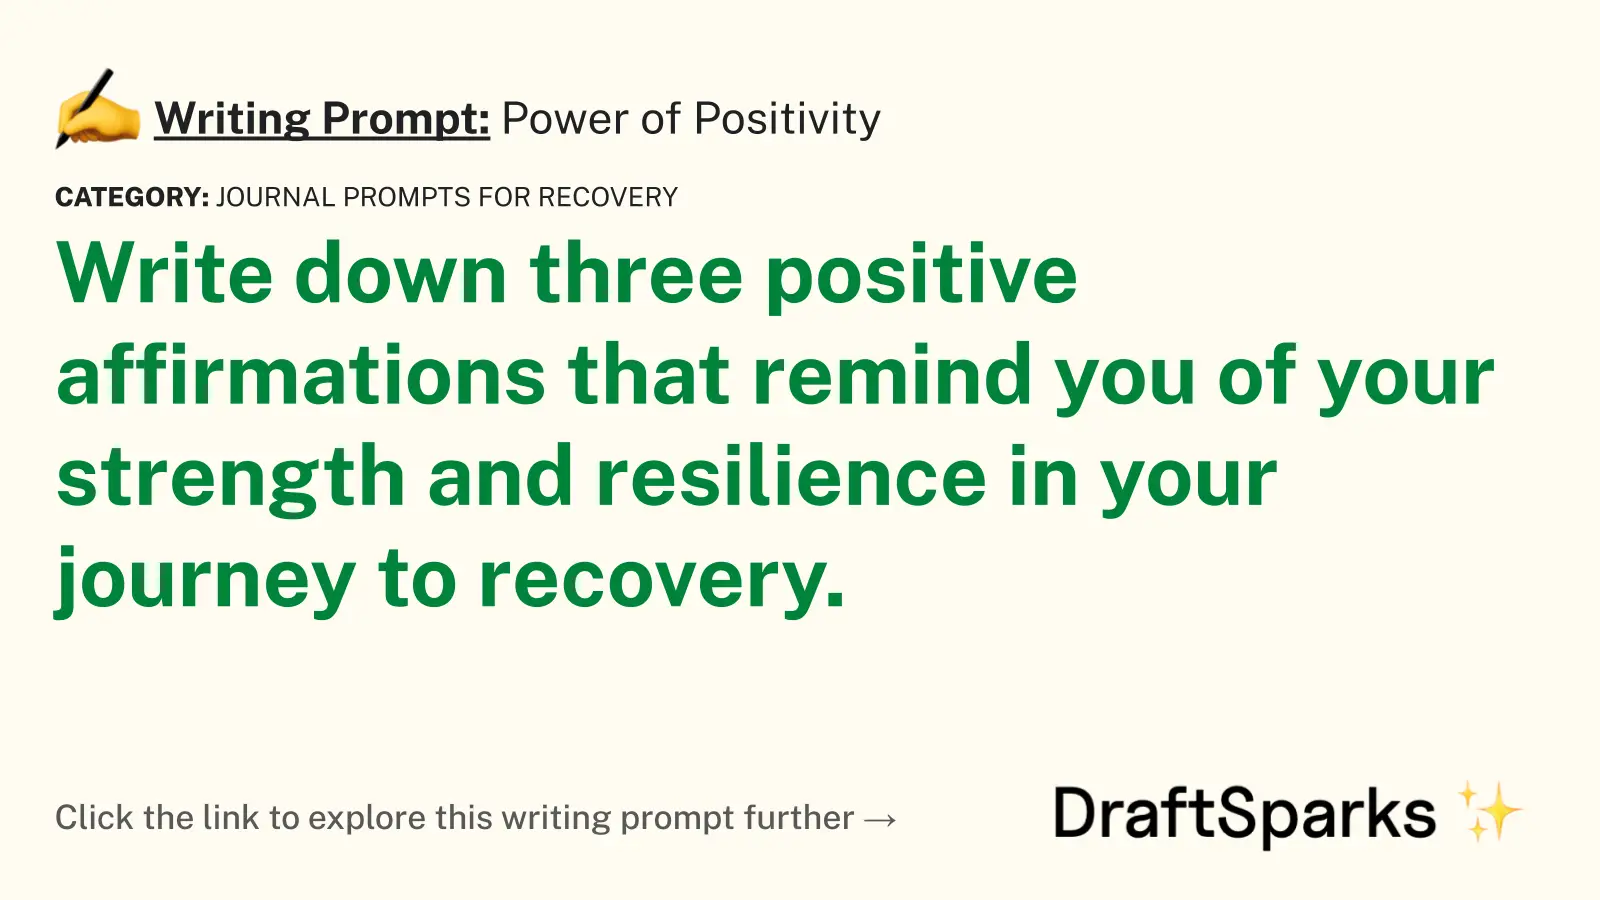 Power of Positivity